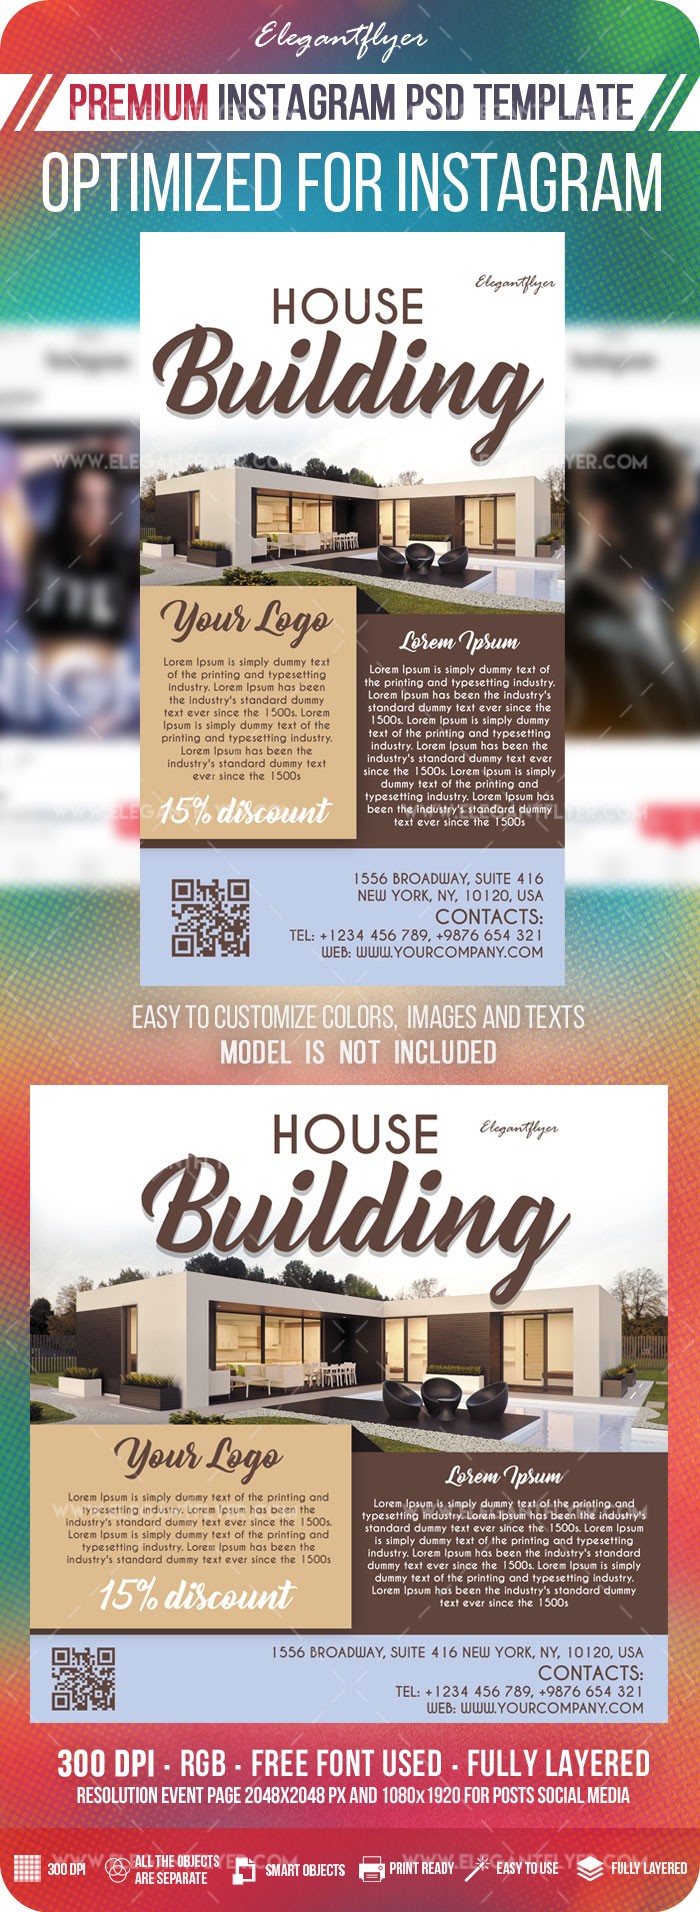 House Building Instagram by ElegantFlyer